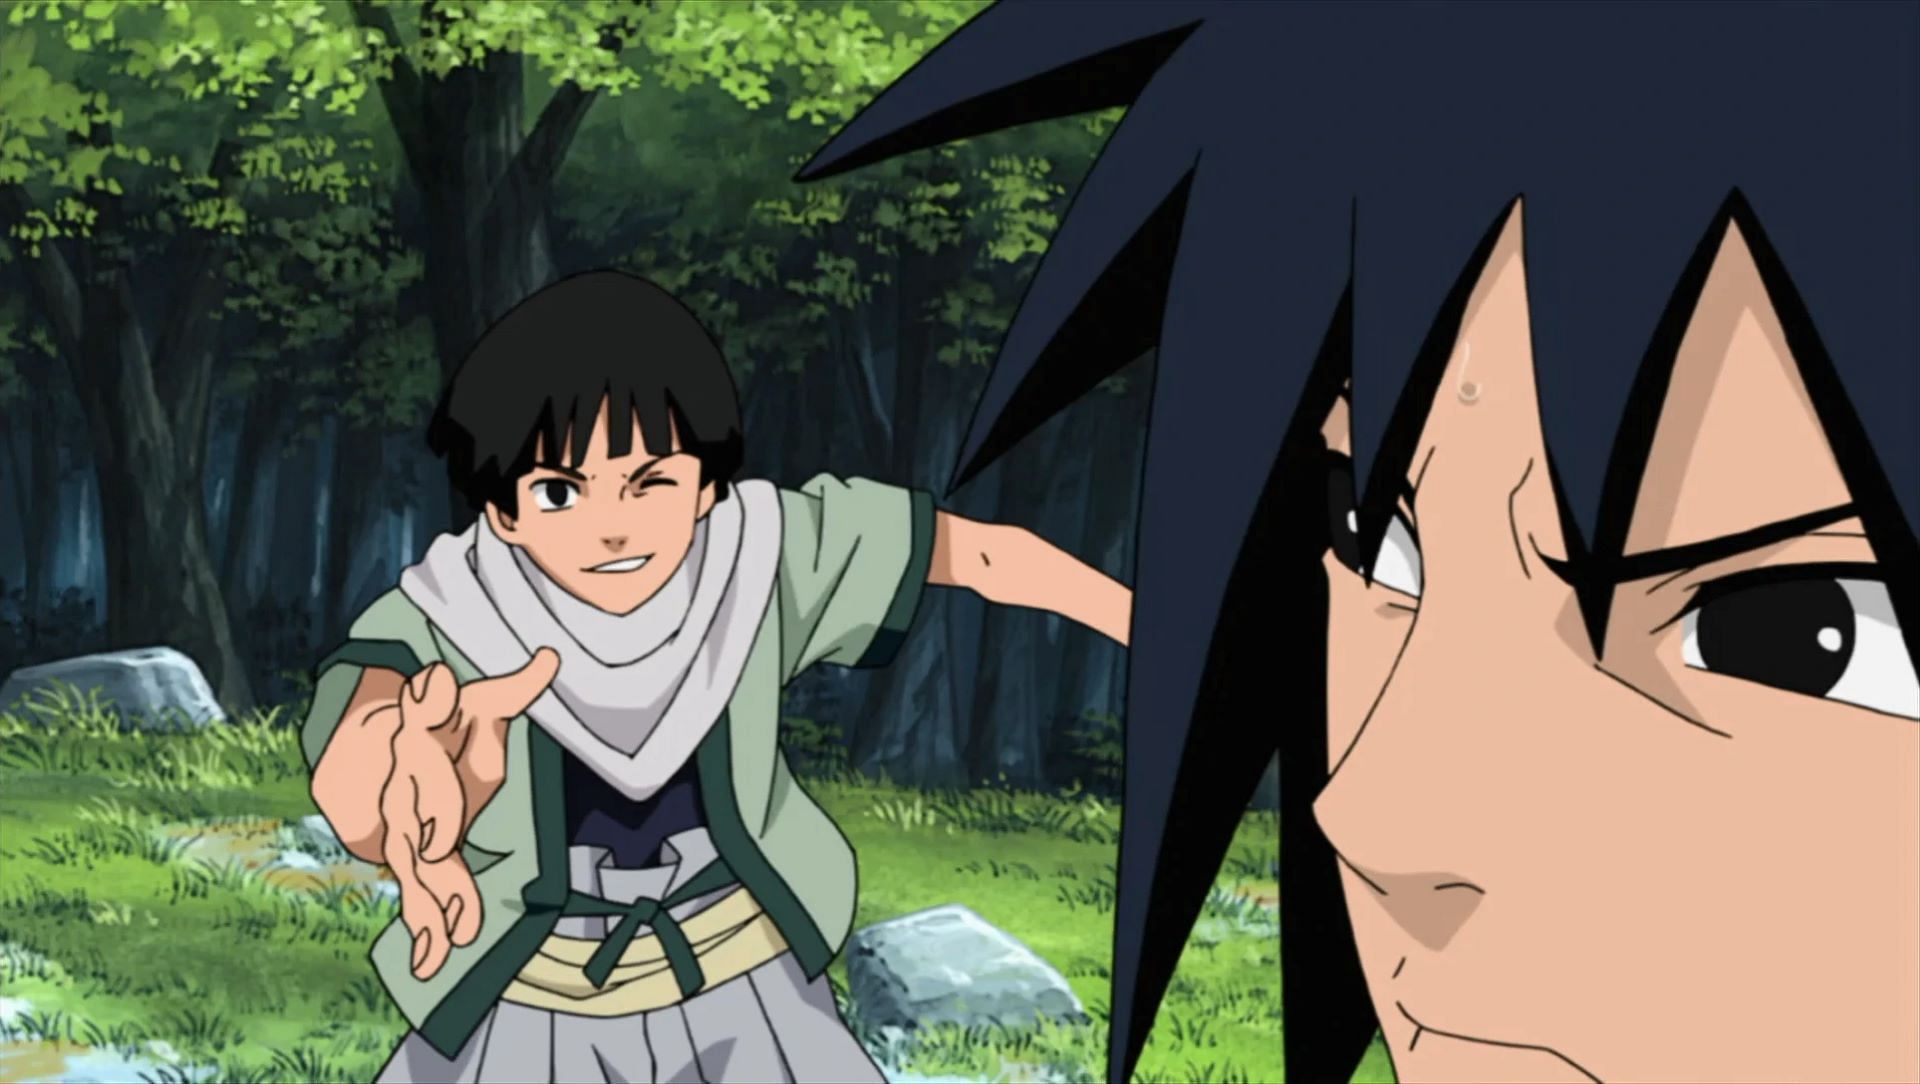 Hashirama and Madara as seen in the anime Naruto (Image via Perriot)